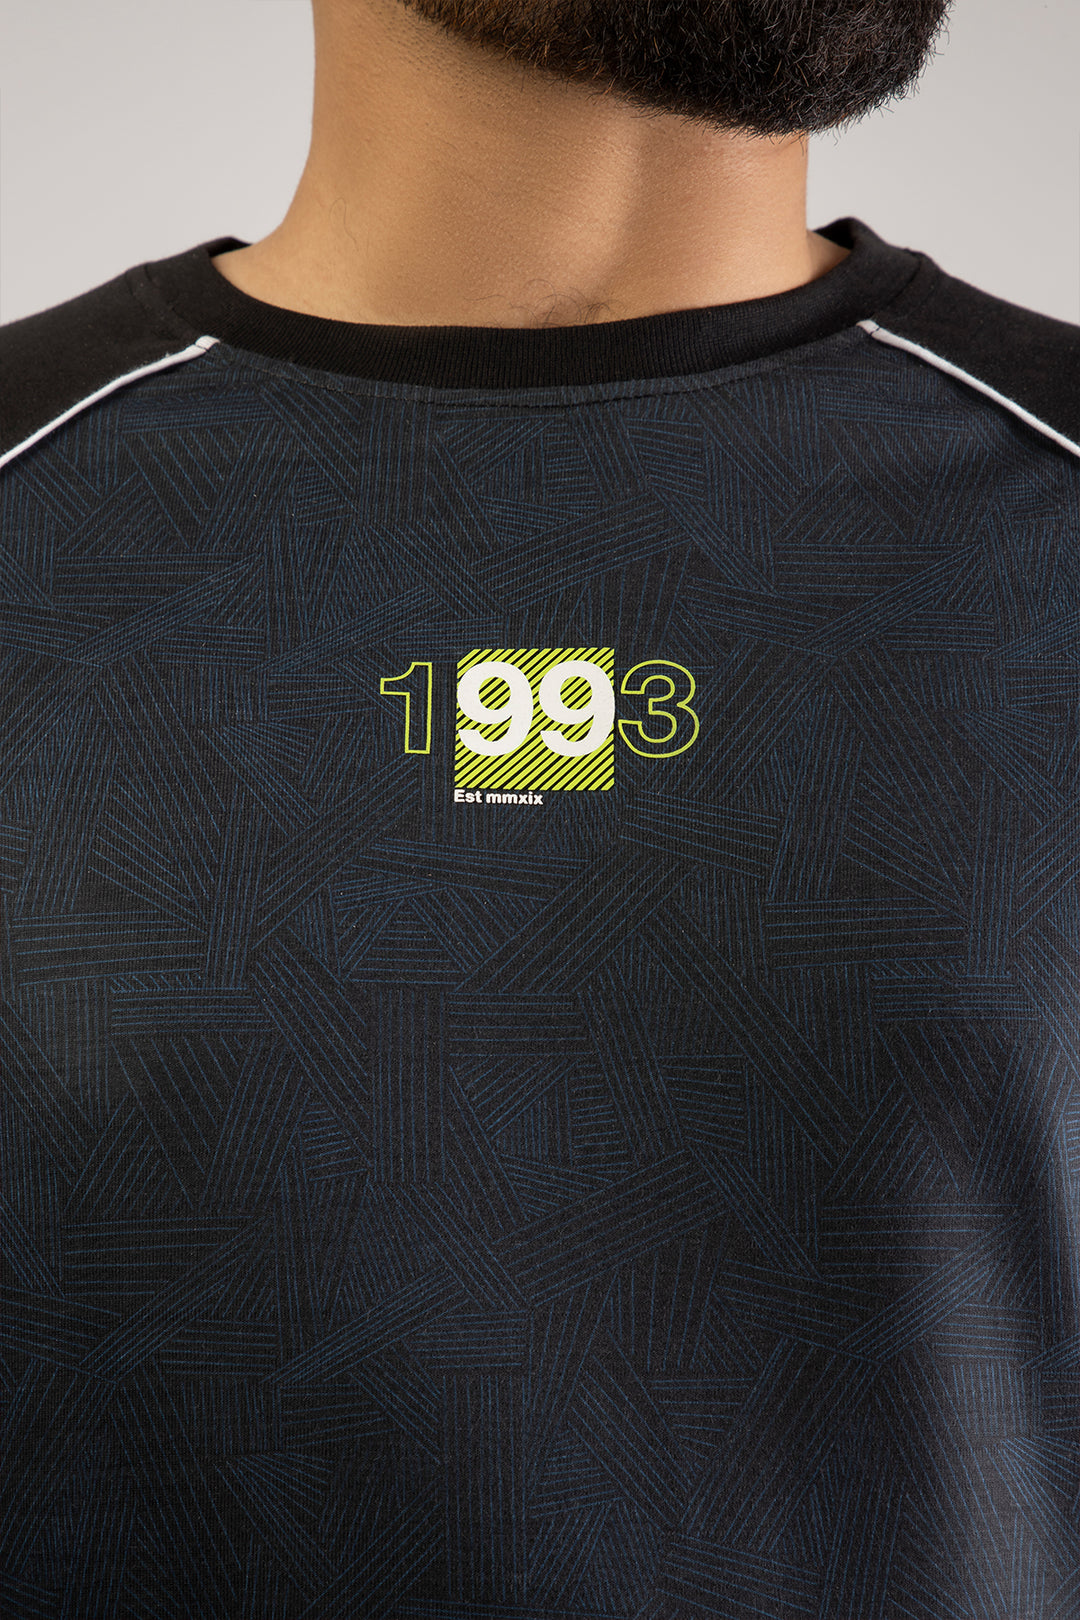 1993 Black Printed Graphic T-Shirt (Plus size) - A24 - MT0319P